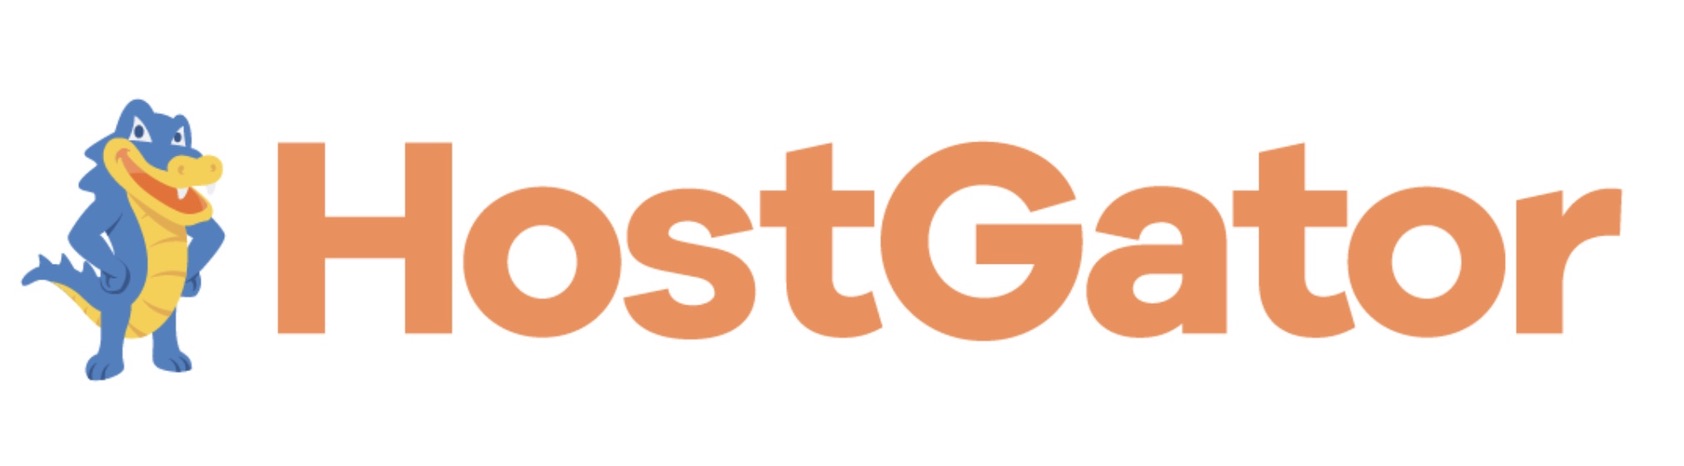 HostGator logo on white background